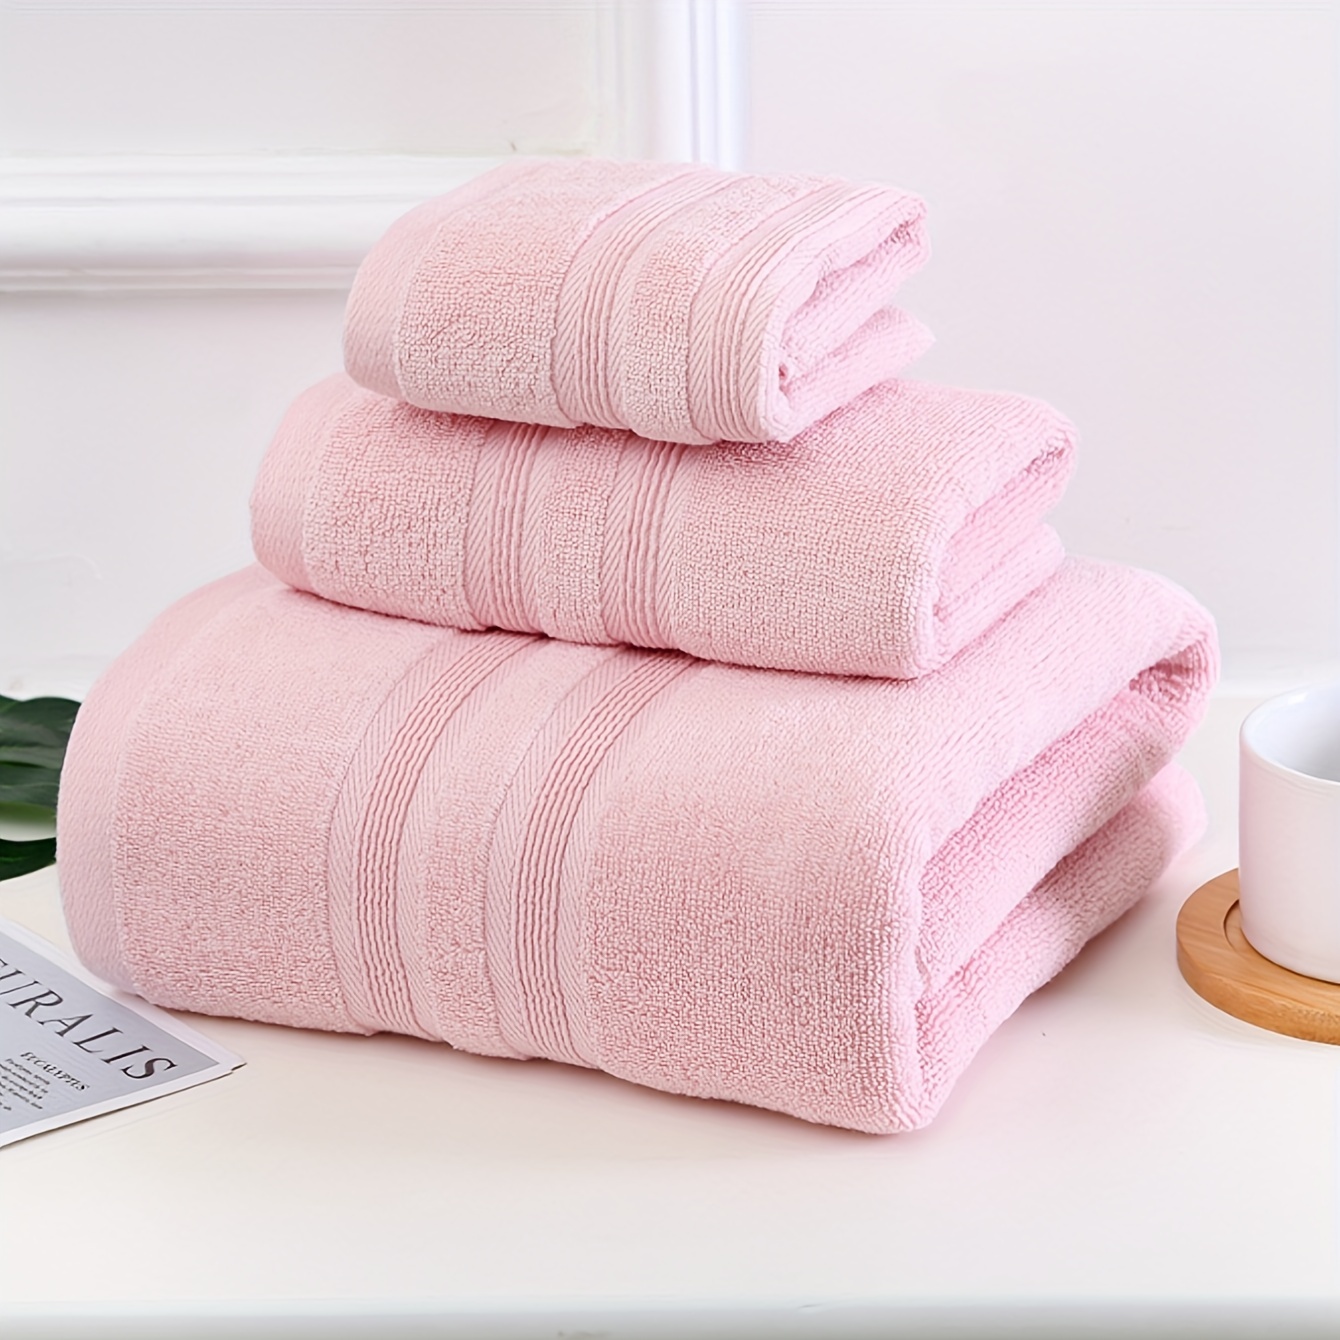 3pcs premium bath linen set 1 square towel 1 bath towel 1 hand towel soft absorbent cotton shower towel set ideal for both men and women bathroom supplies home supplies